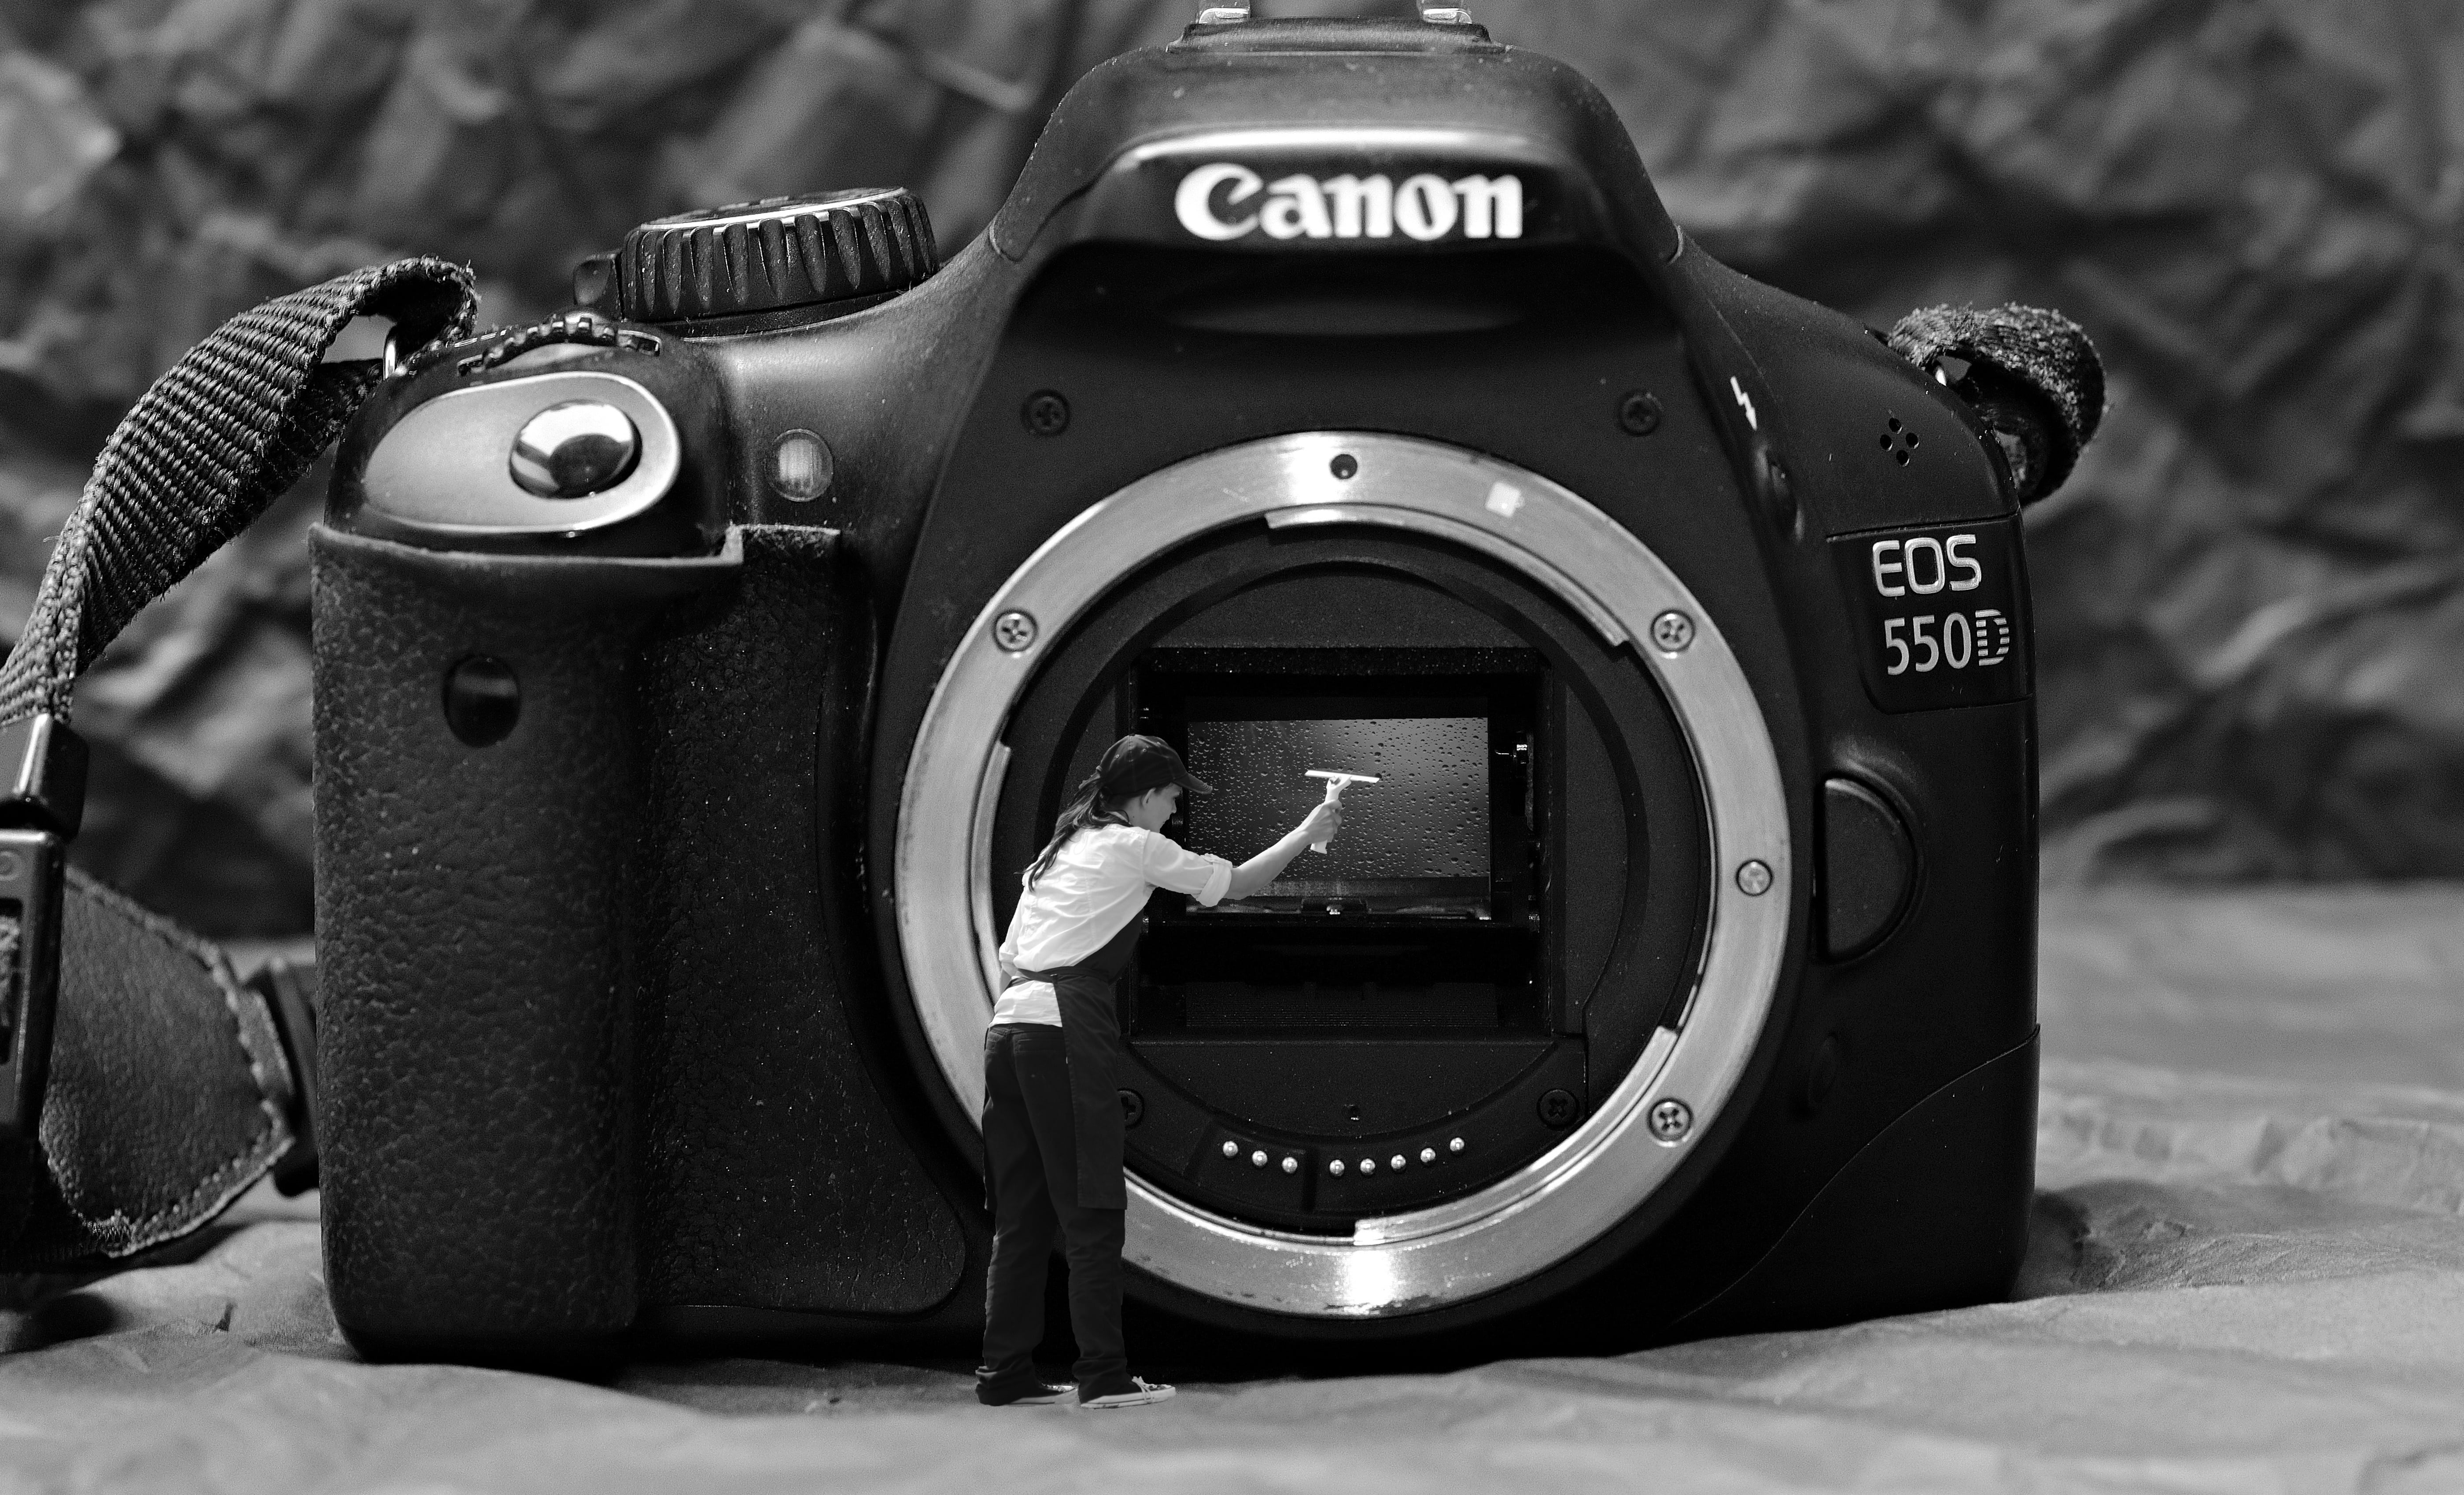 grayscale photography of Canon EOS 550D camera, frühjahrsputz